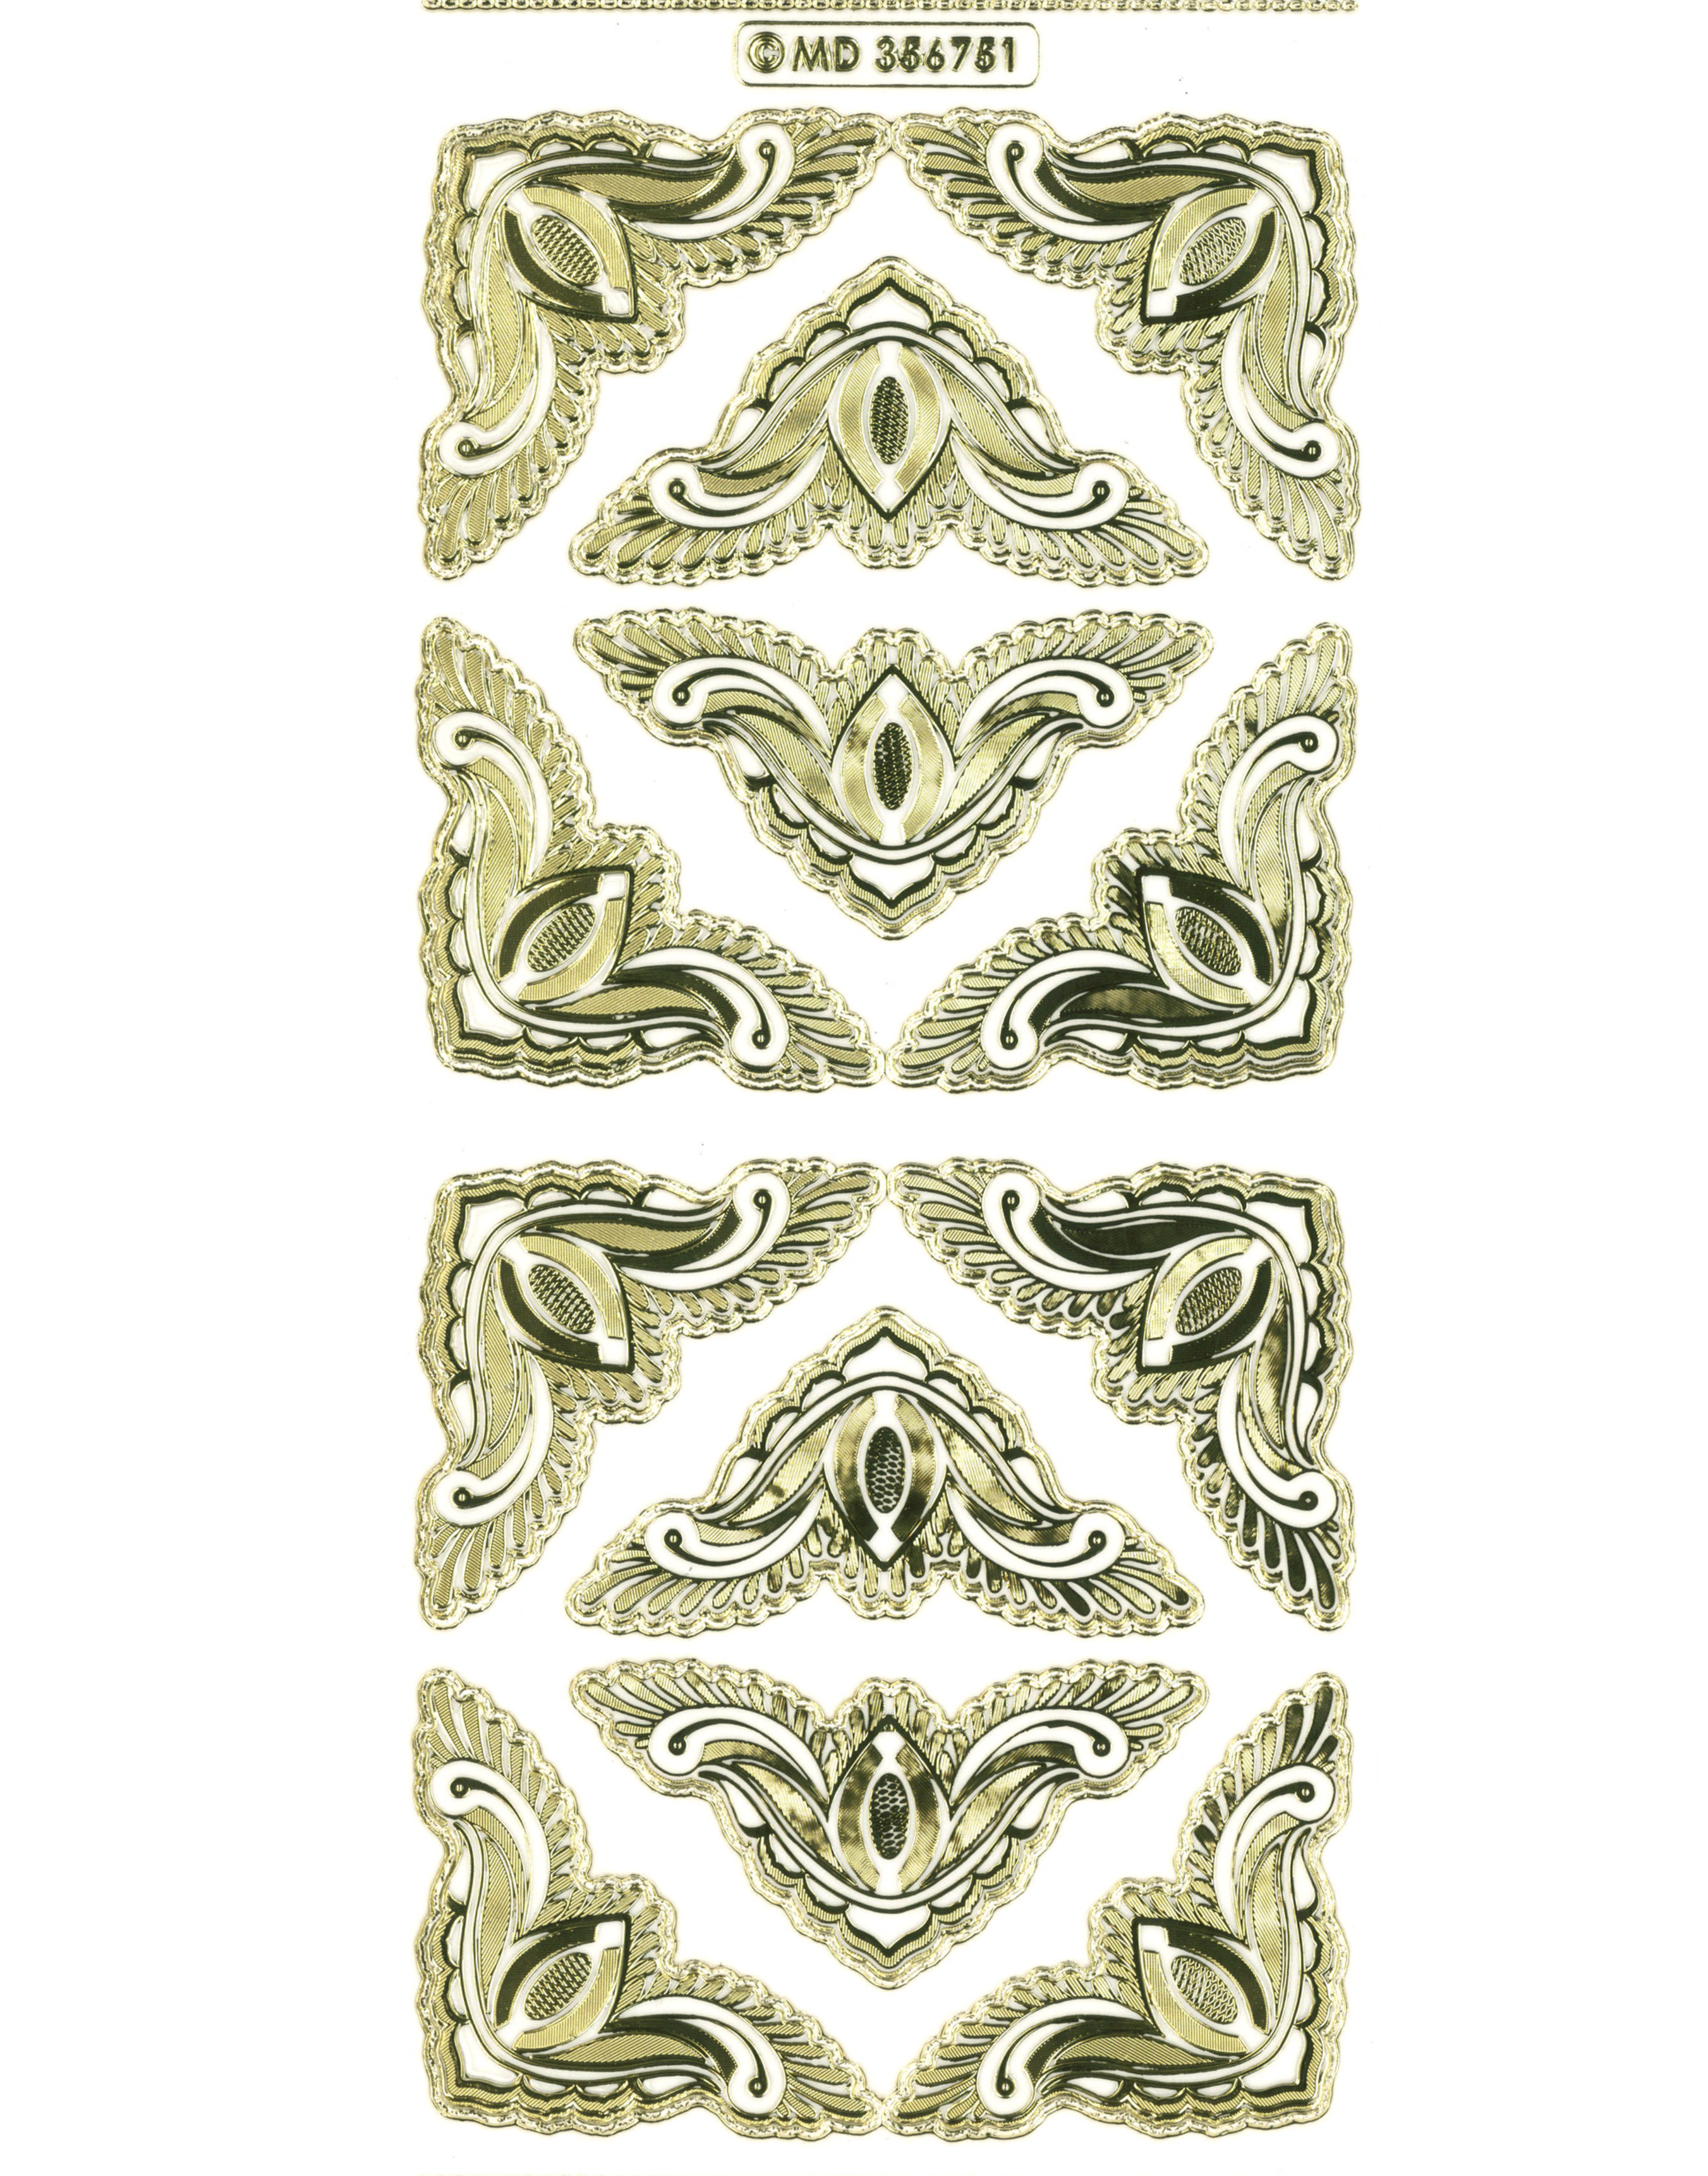 Shiny Outline Stickers Ecken Corners Feathers gold transparent Konturensticker 10x23cm Bogen